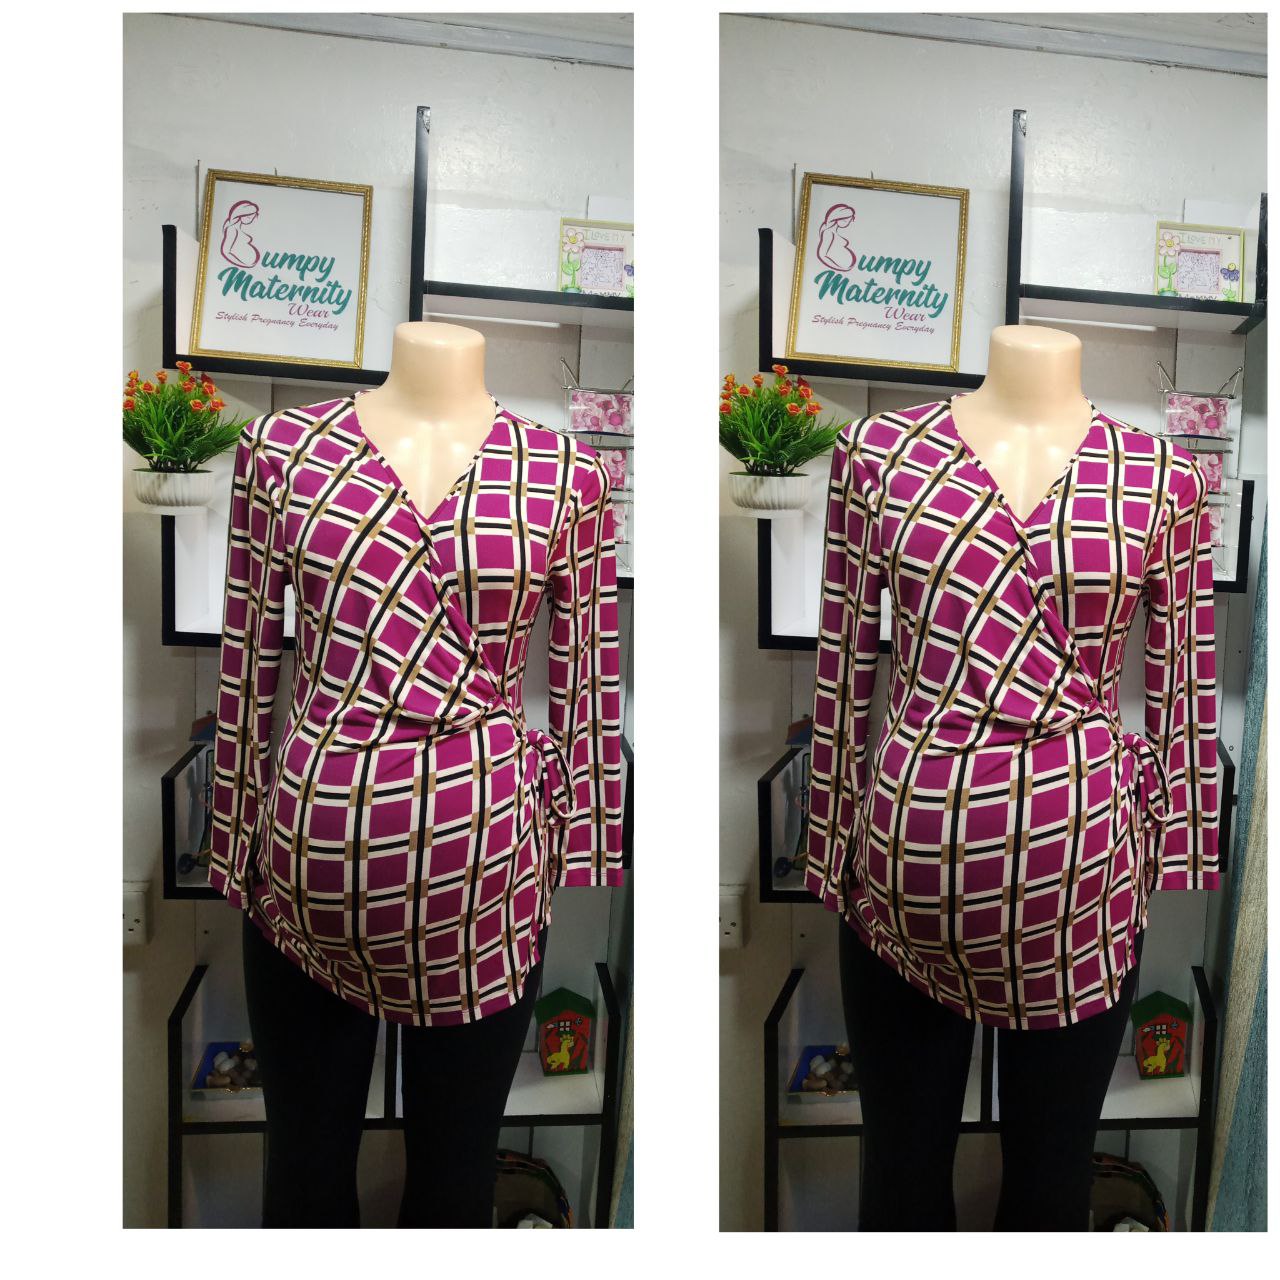 Official/nursing maternity top - Bumpy Maternity Wear